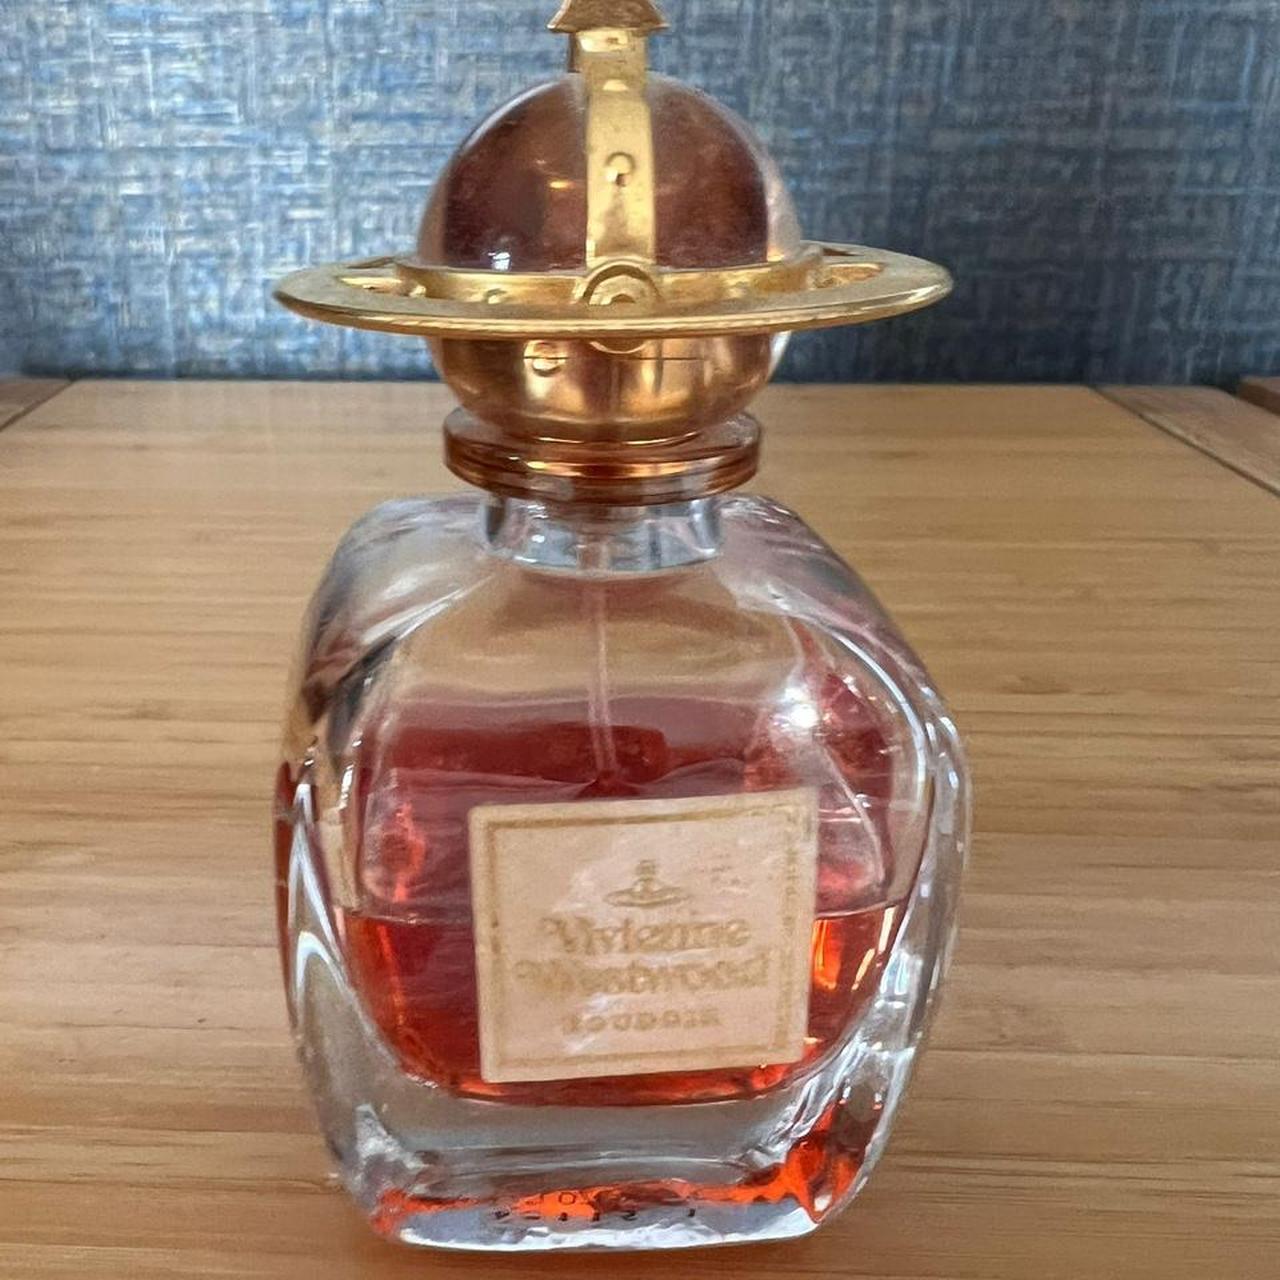 Vivienne Westwood Fragrance | Depop